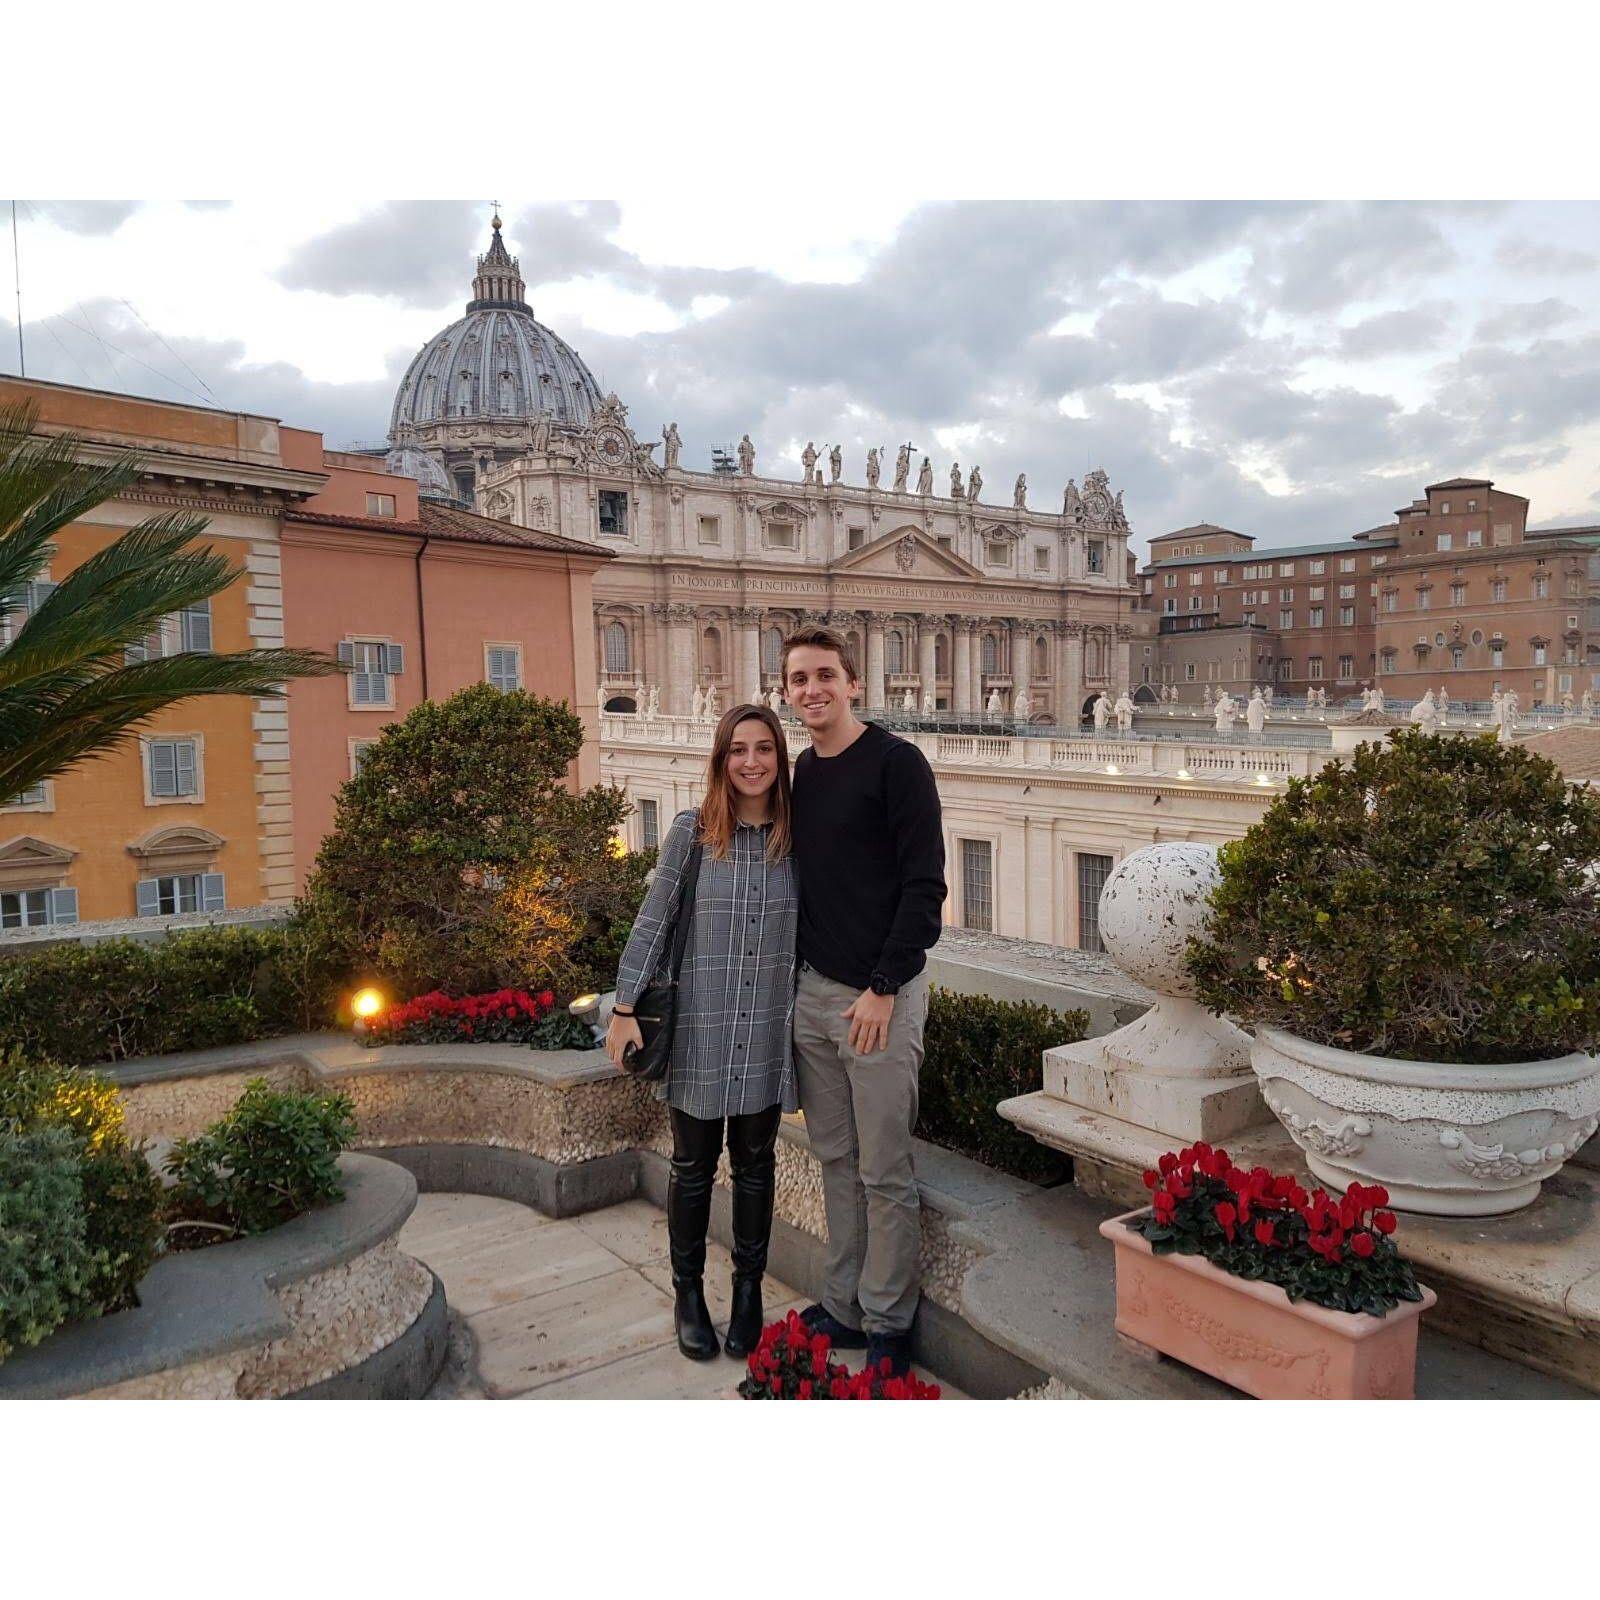 Enjoying views of St Peter’s Square in Rome / Disfrutando de las vistas de la plaza de San Pedro en Roma